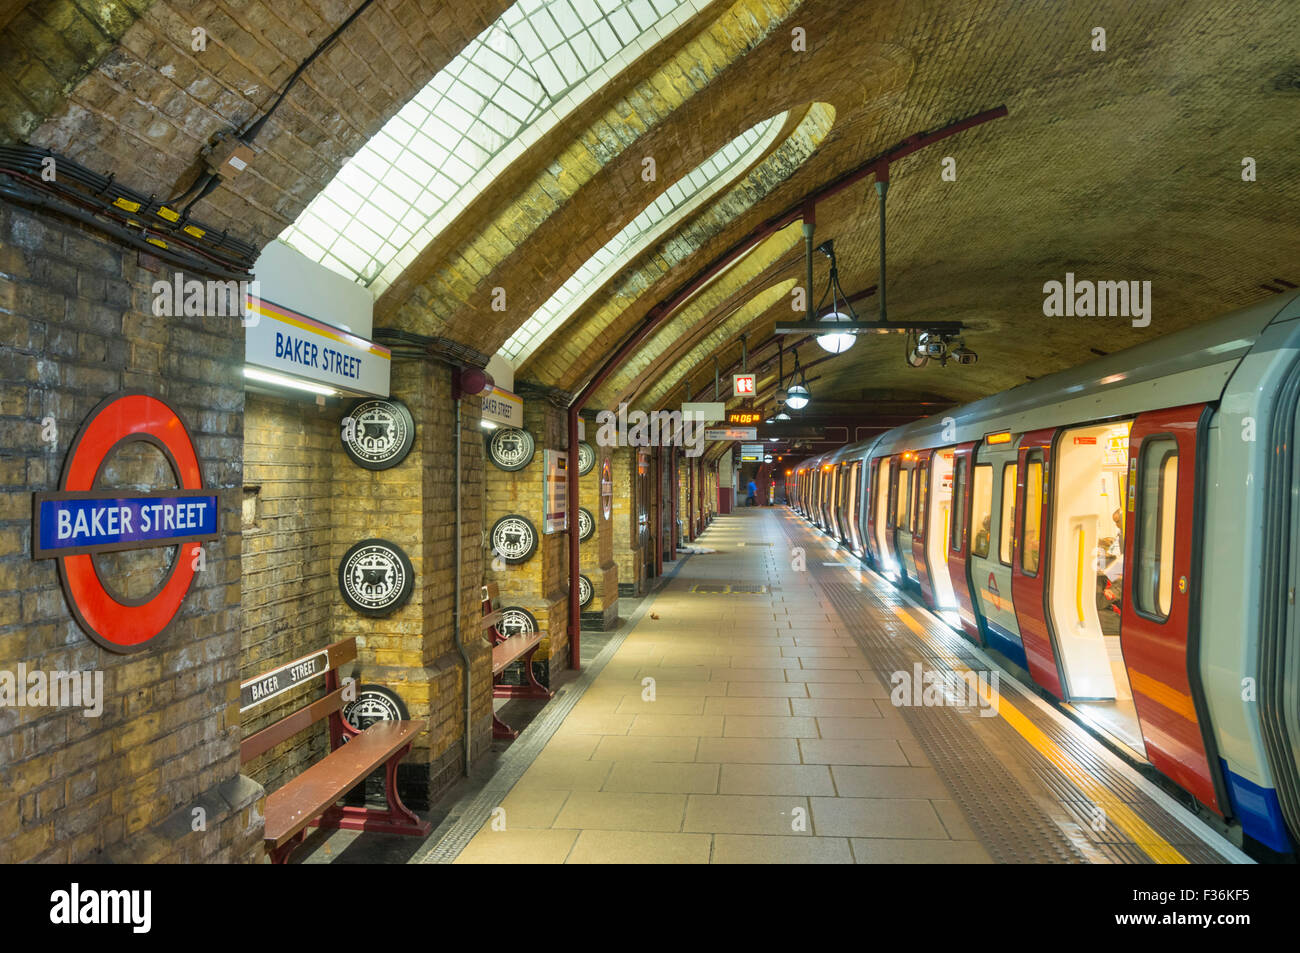 Victorian architecture and exposed brickwork at Baker Street underground station platform London England UK Gb EU Europe Stock Photo